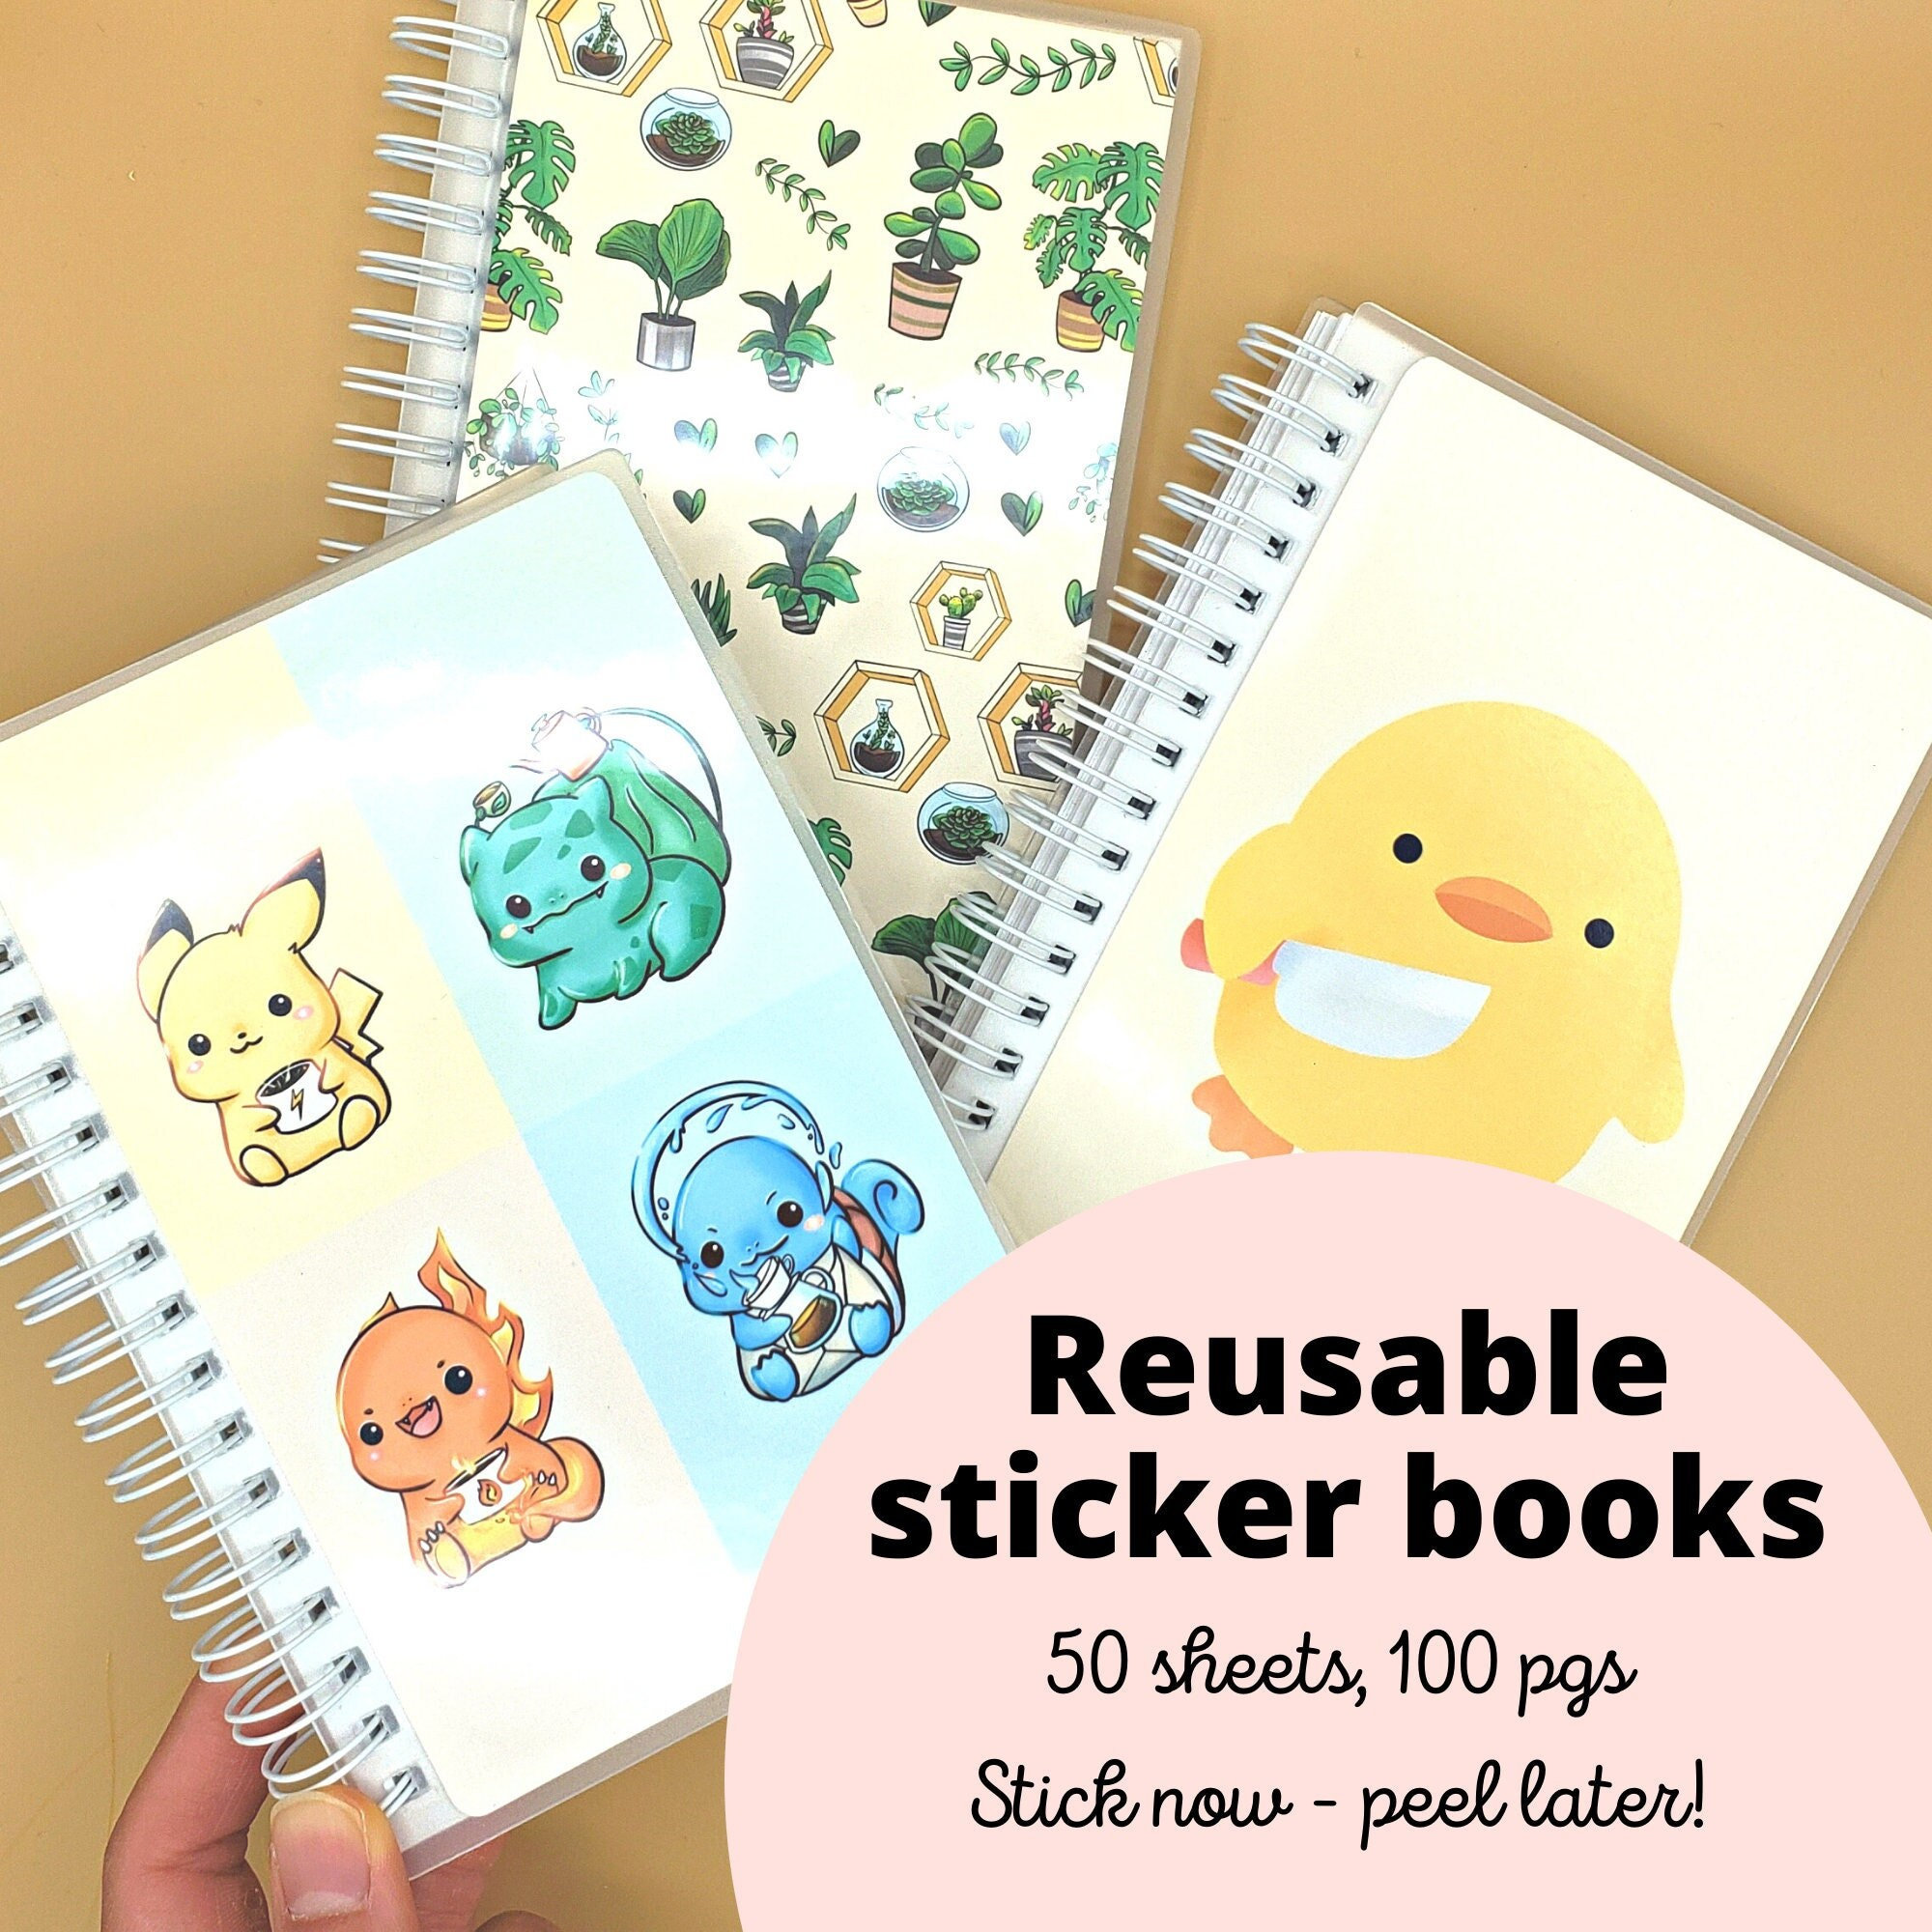 Notebooks and Sticker Books!